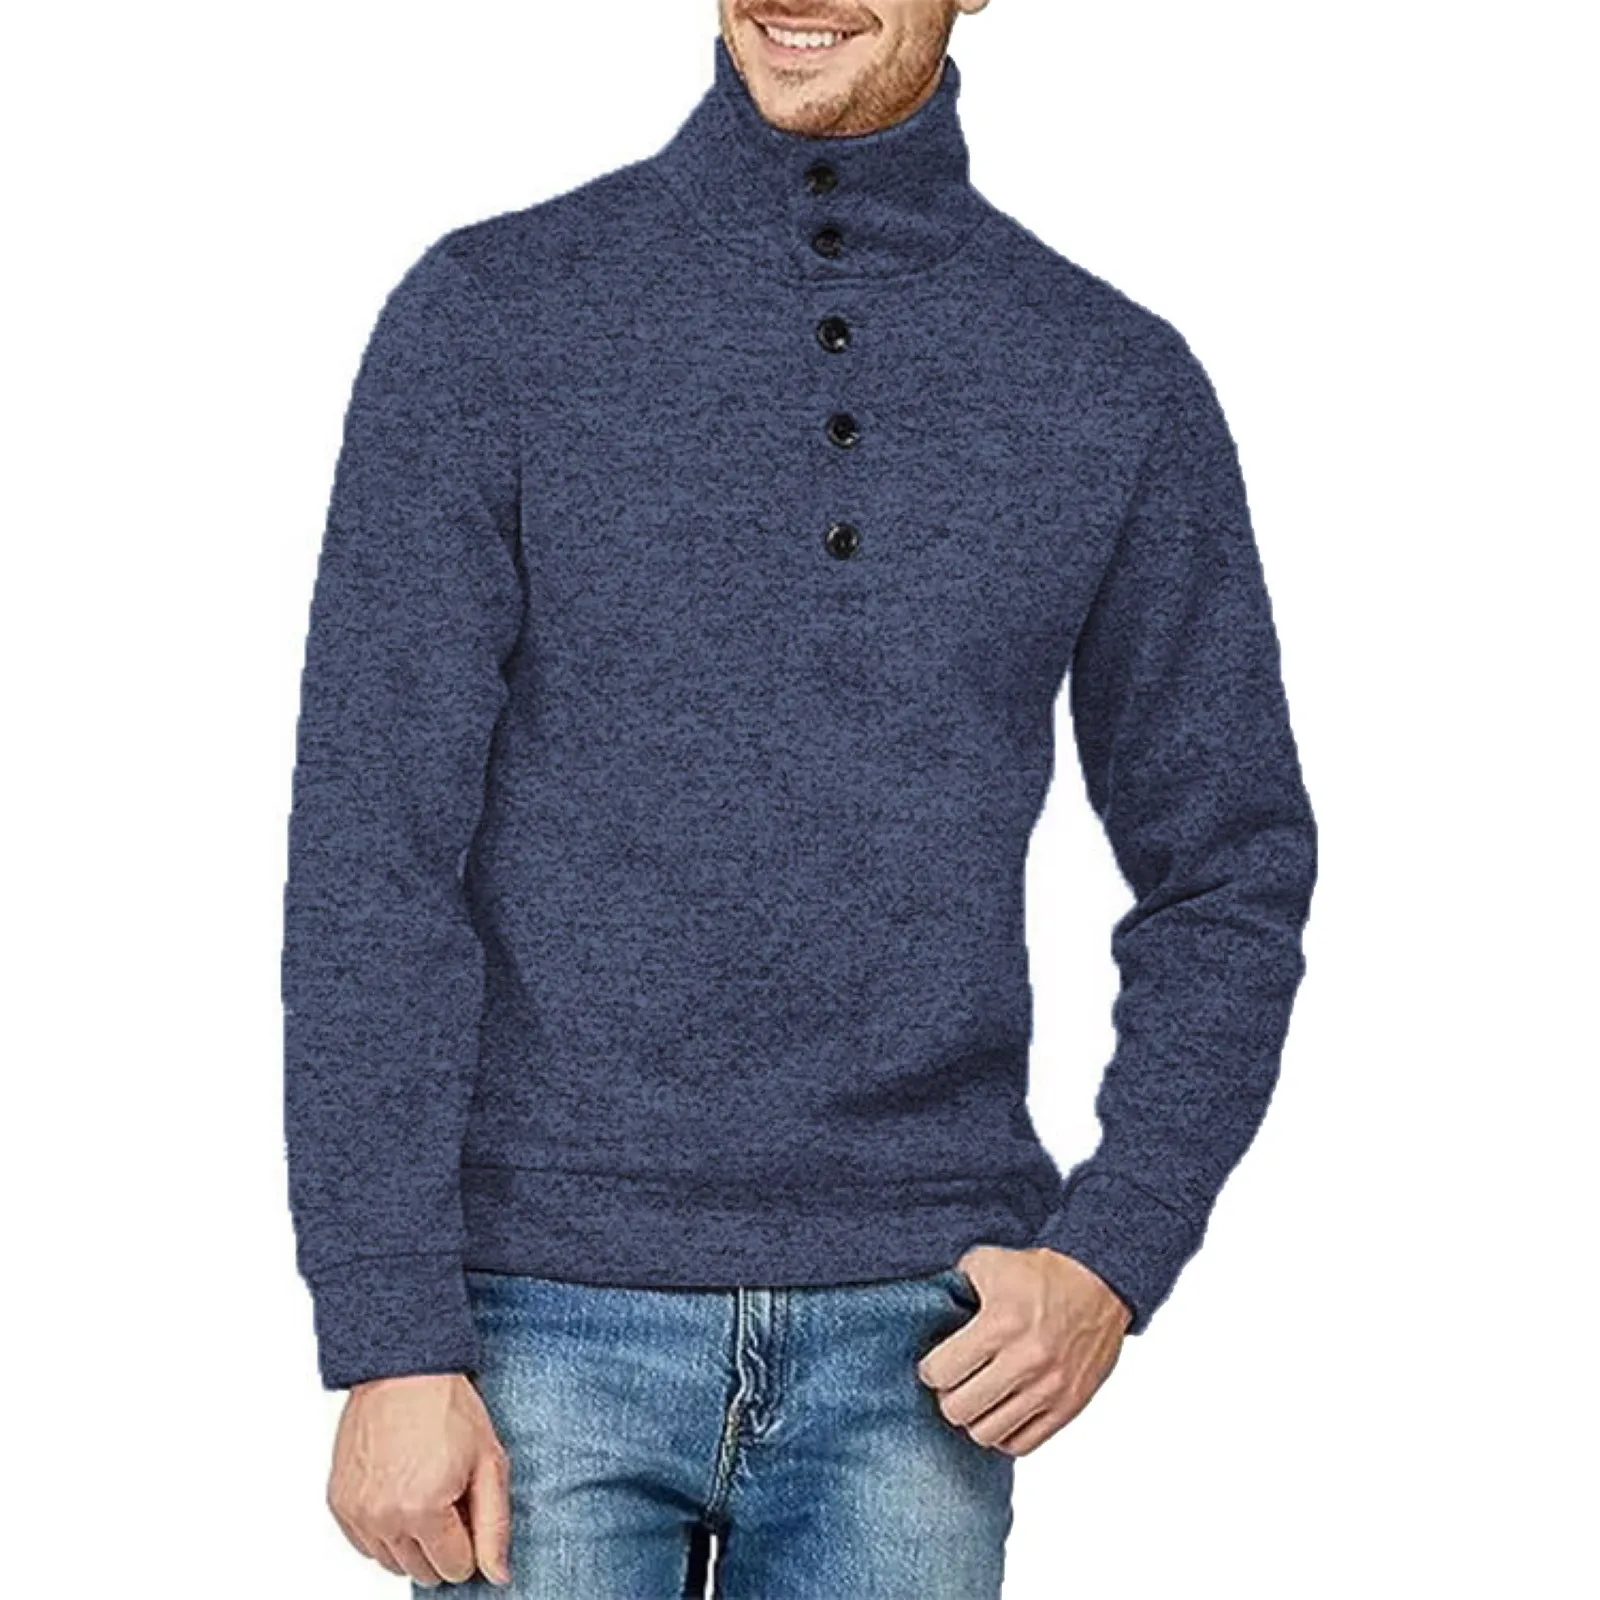 Strick pullover Pullover Fleece Mode Pullover Männer Herbst Winter Kleidung Strickwaren Pullover hochwertige warme Tops Langarm